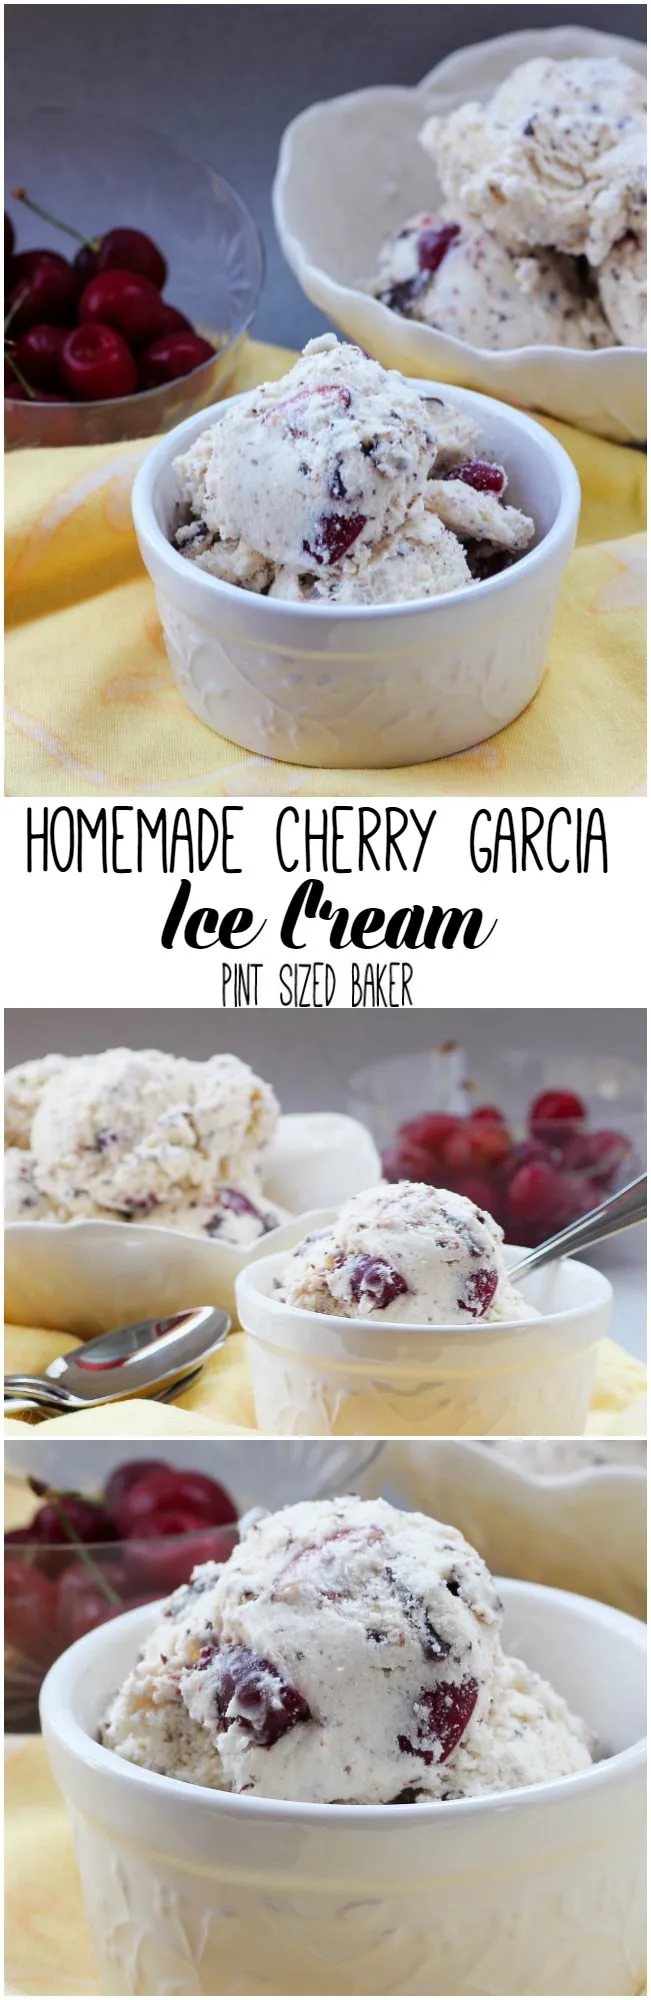 Enjoy your own Homemade Cherry Garcia Ice Cream loaded with fresh sweet cherries and chocolate chunks!